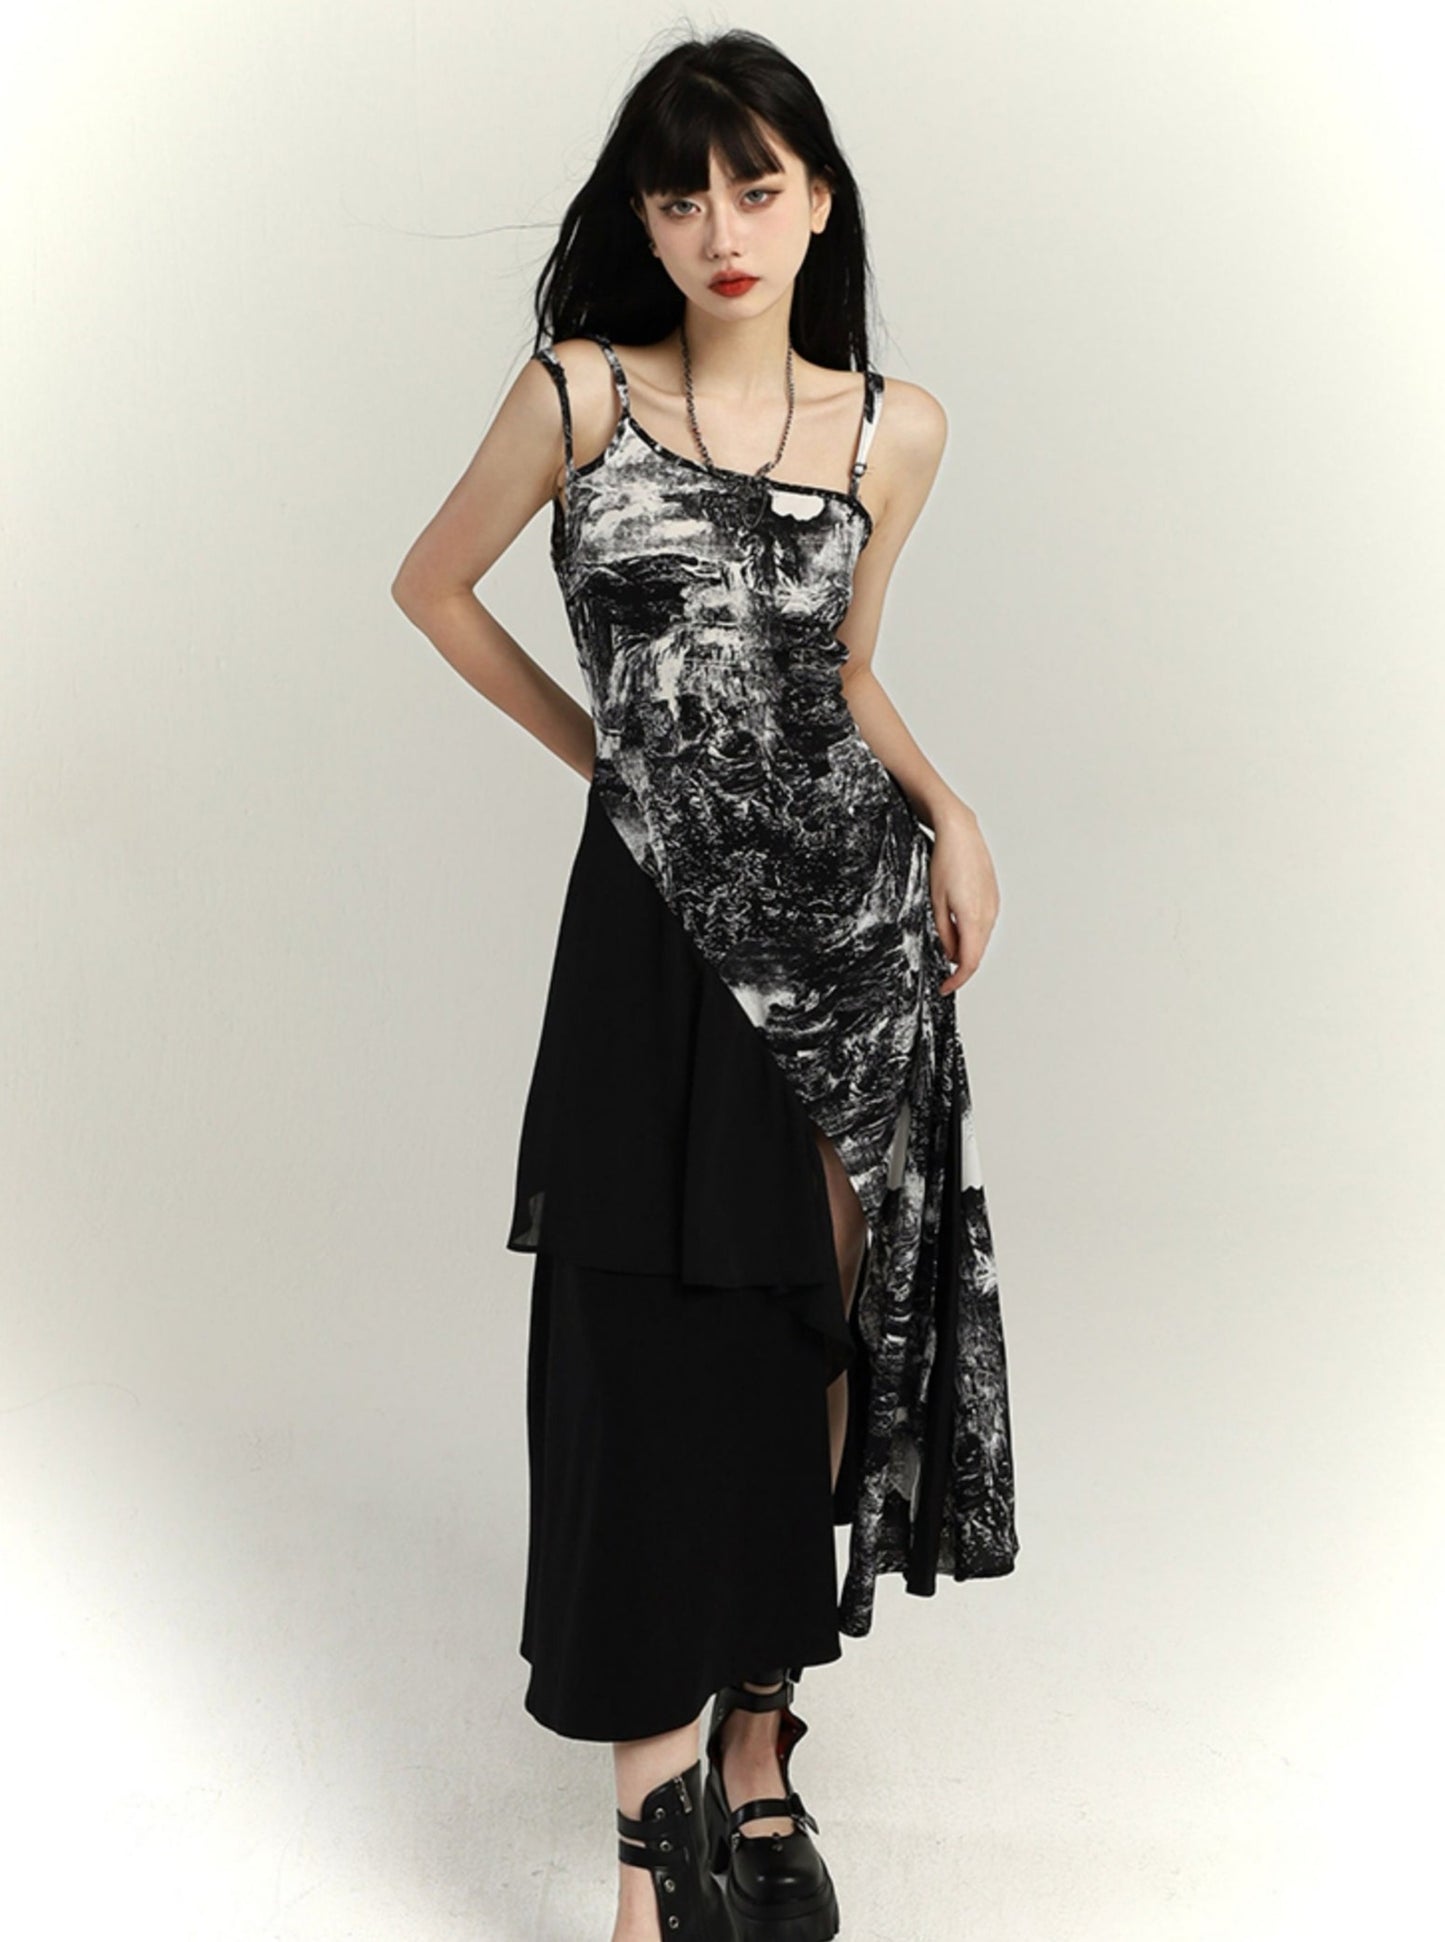 Chinese Suspender Dress